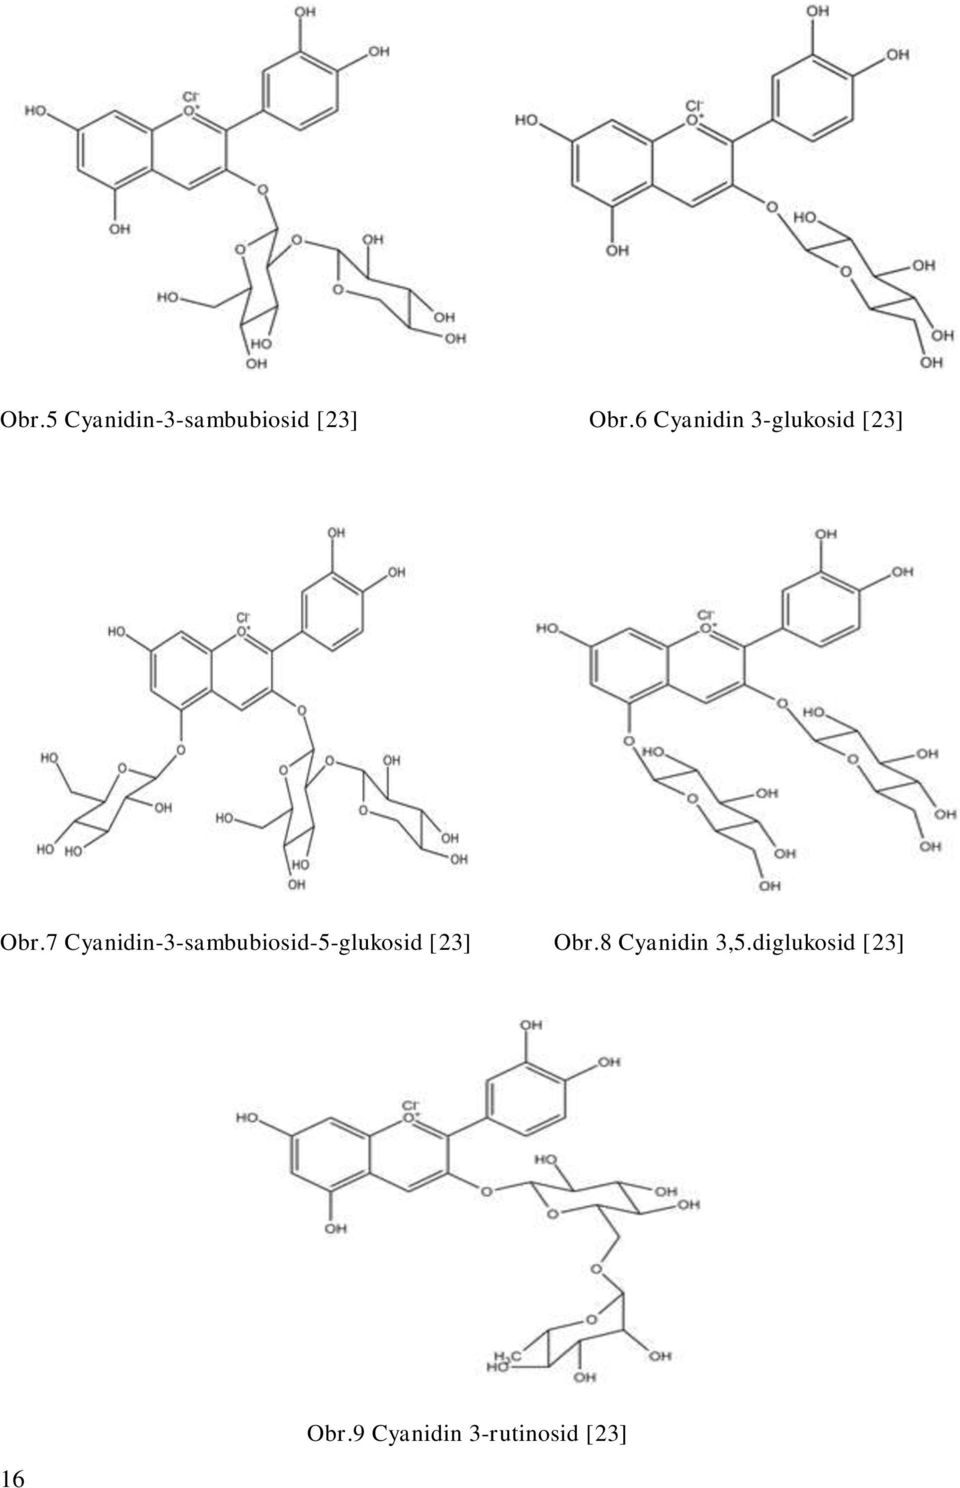 7 Cynidin-3-smuiosid-5-glukosid [23] Or.